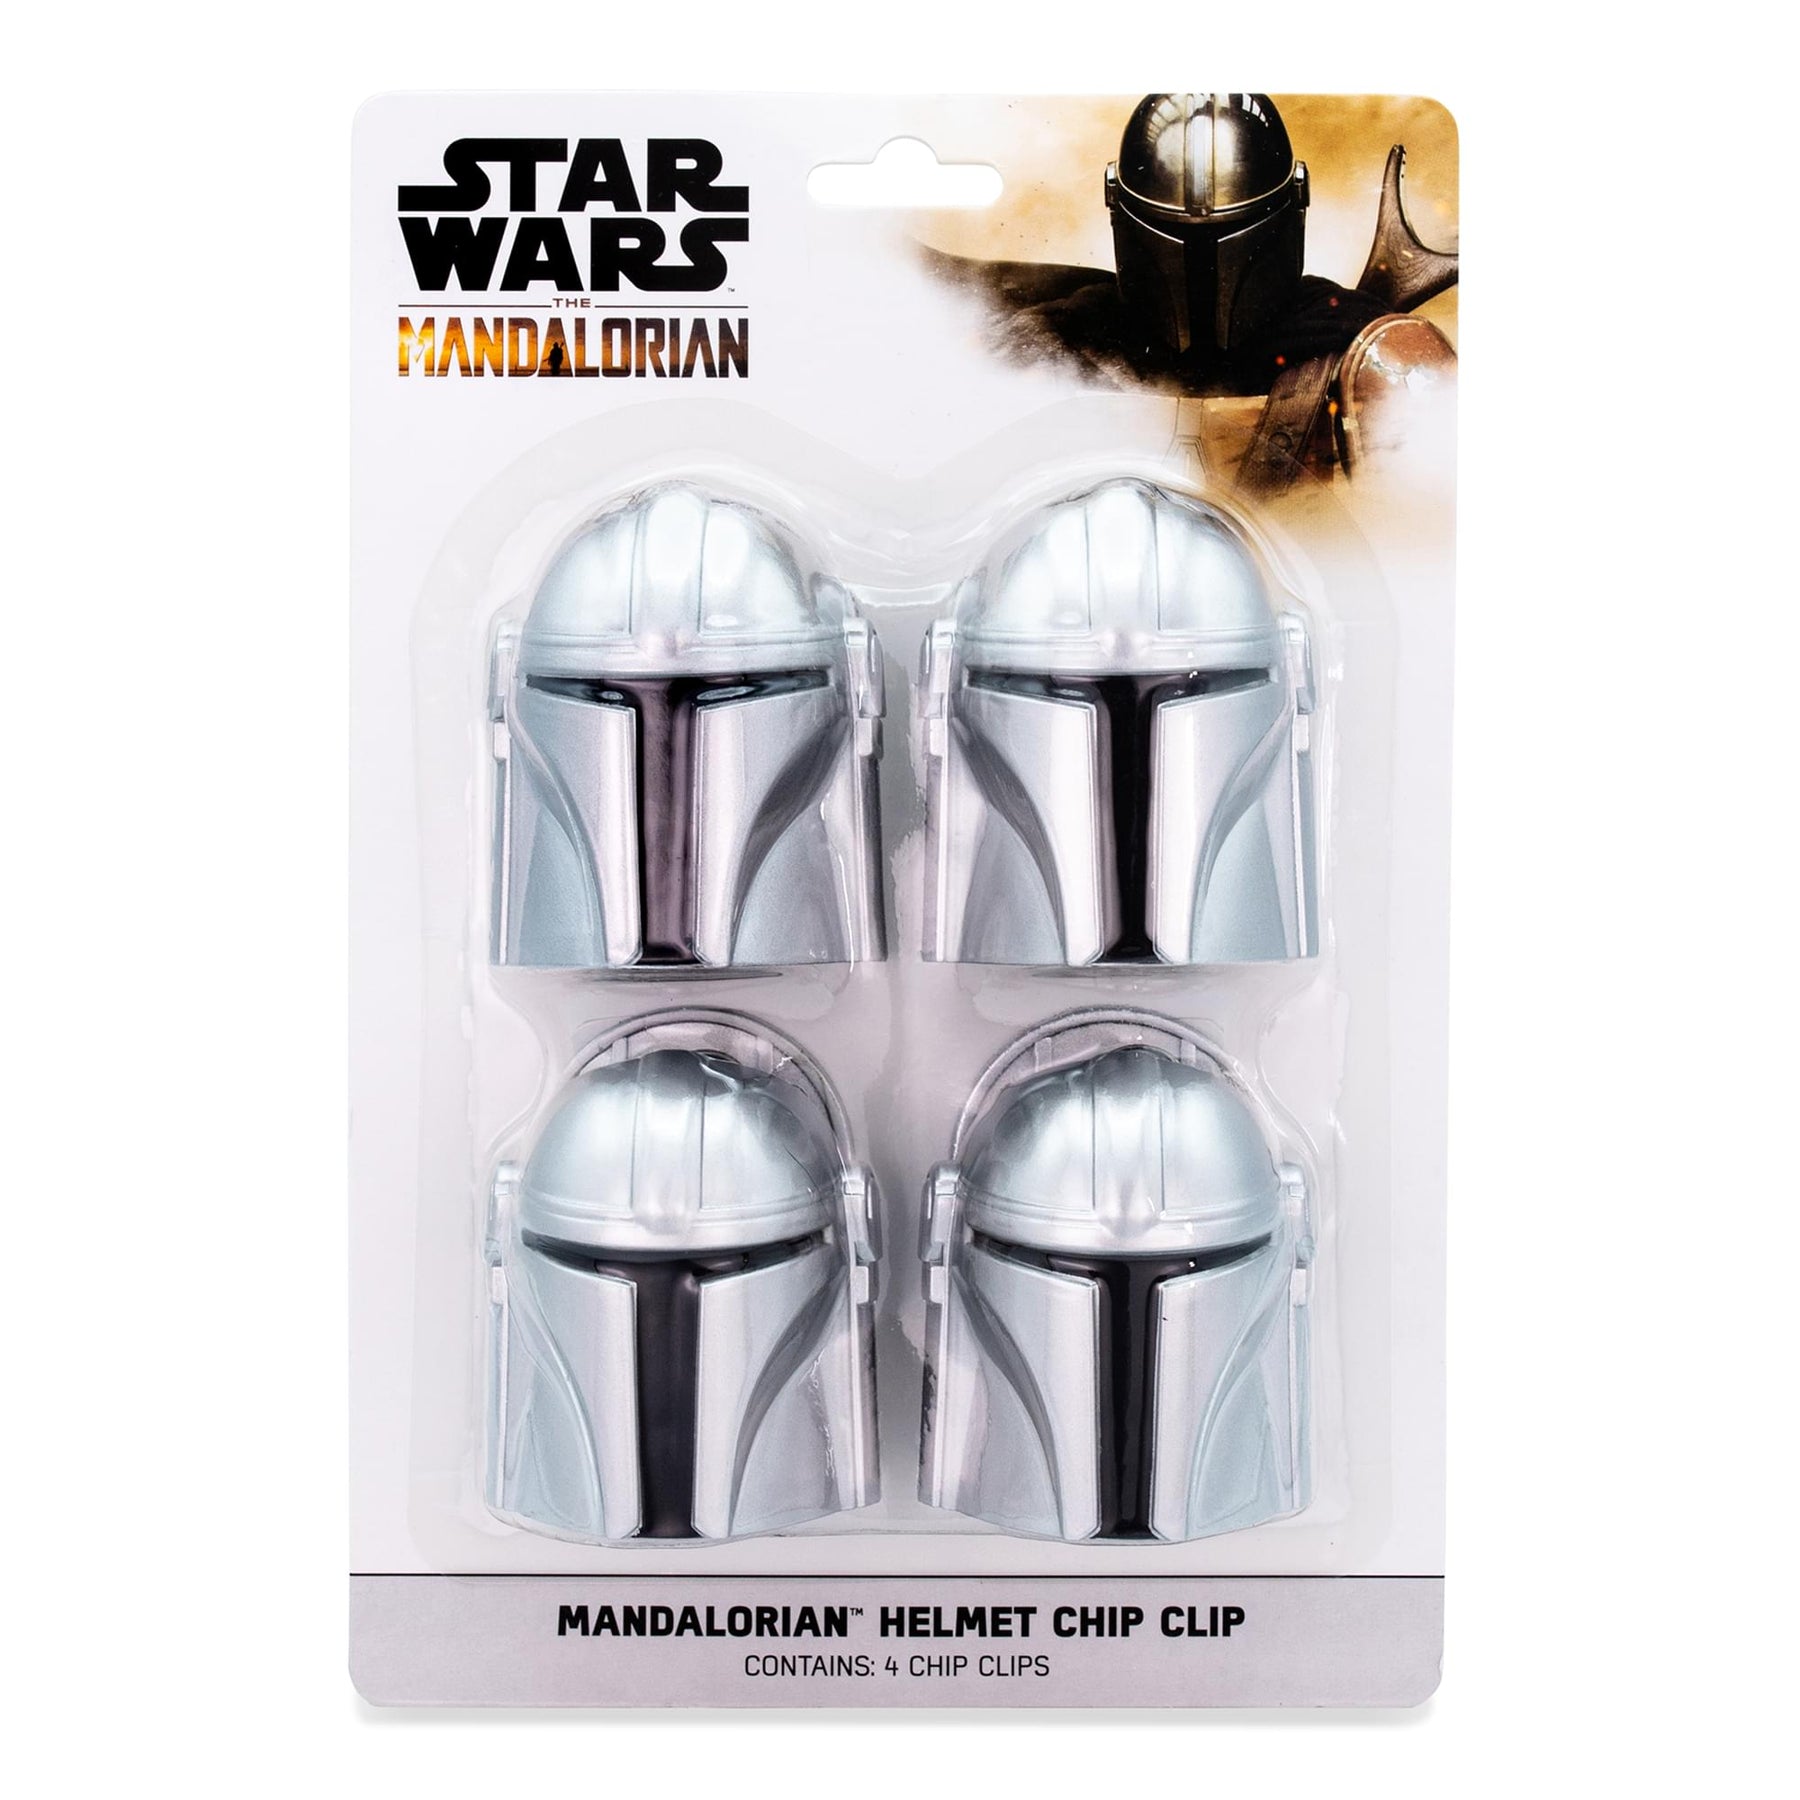 Star Wars: The Mandalorian Helmet Chip Clips | Set of 4